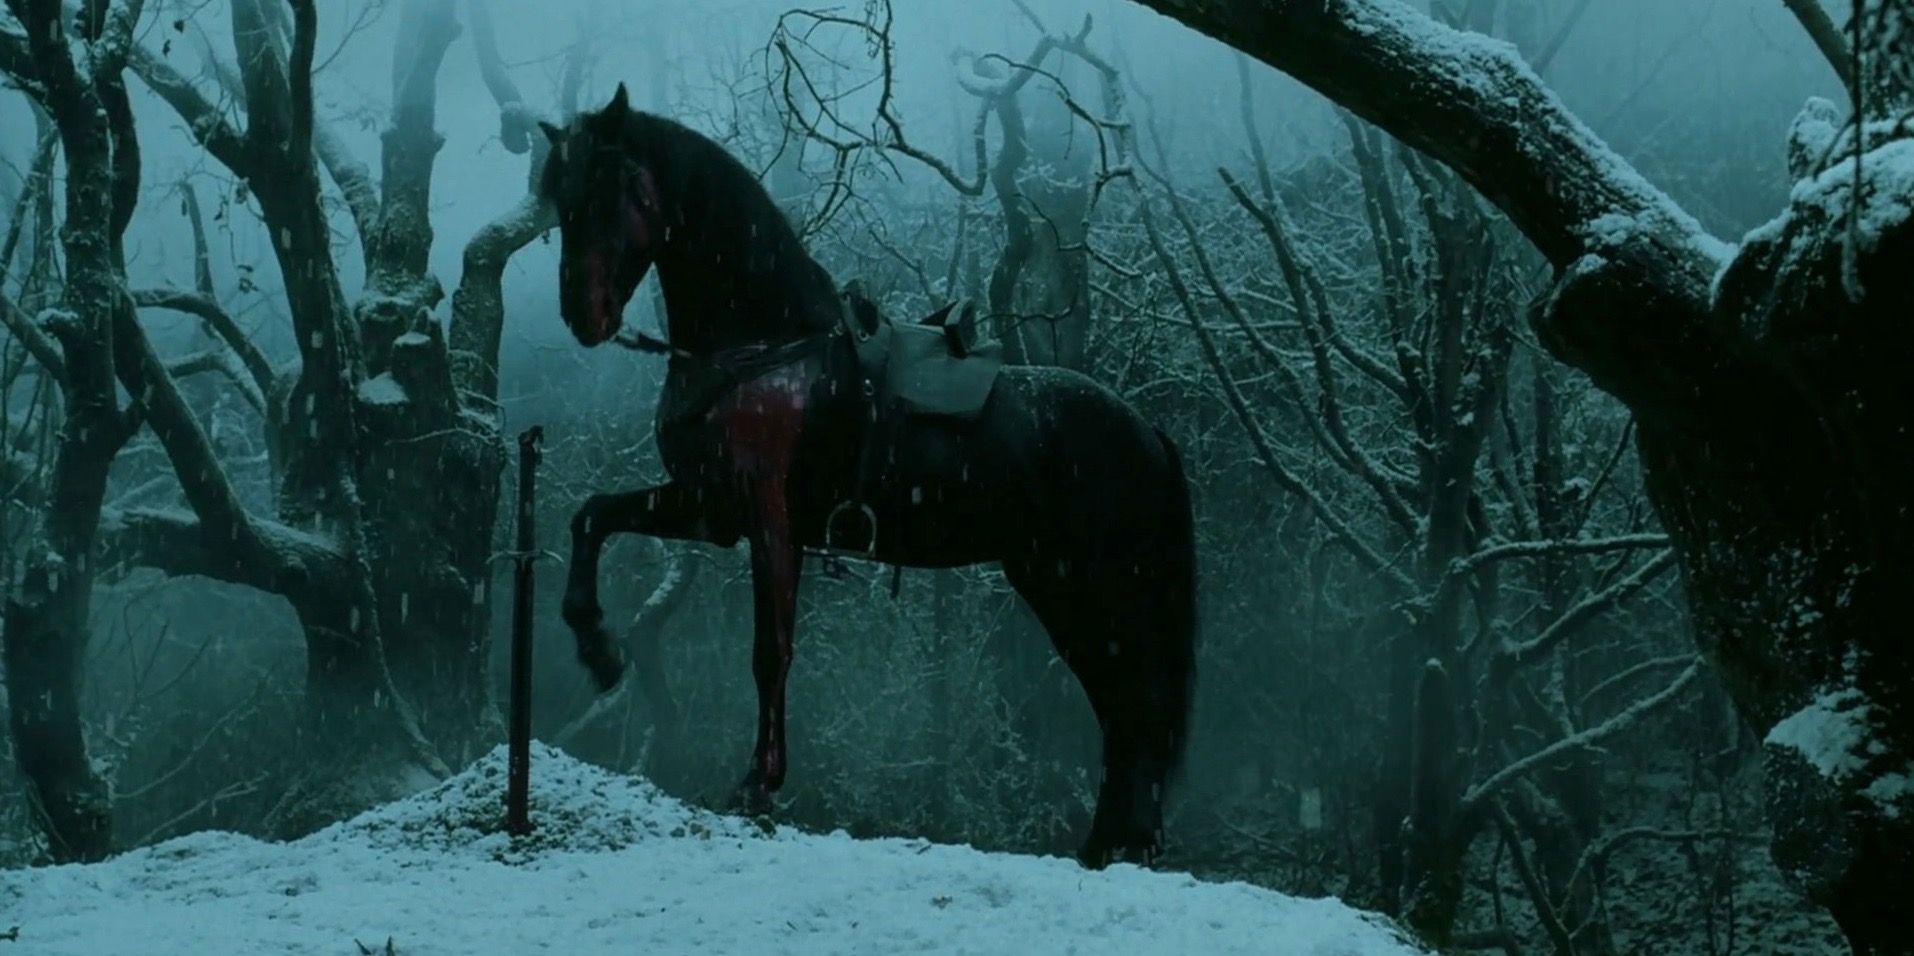 Daredevil the Horse in Sleepy Hollow